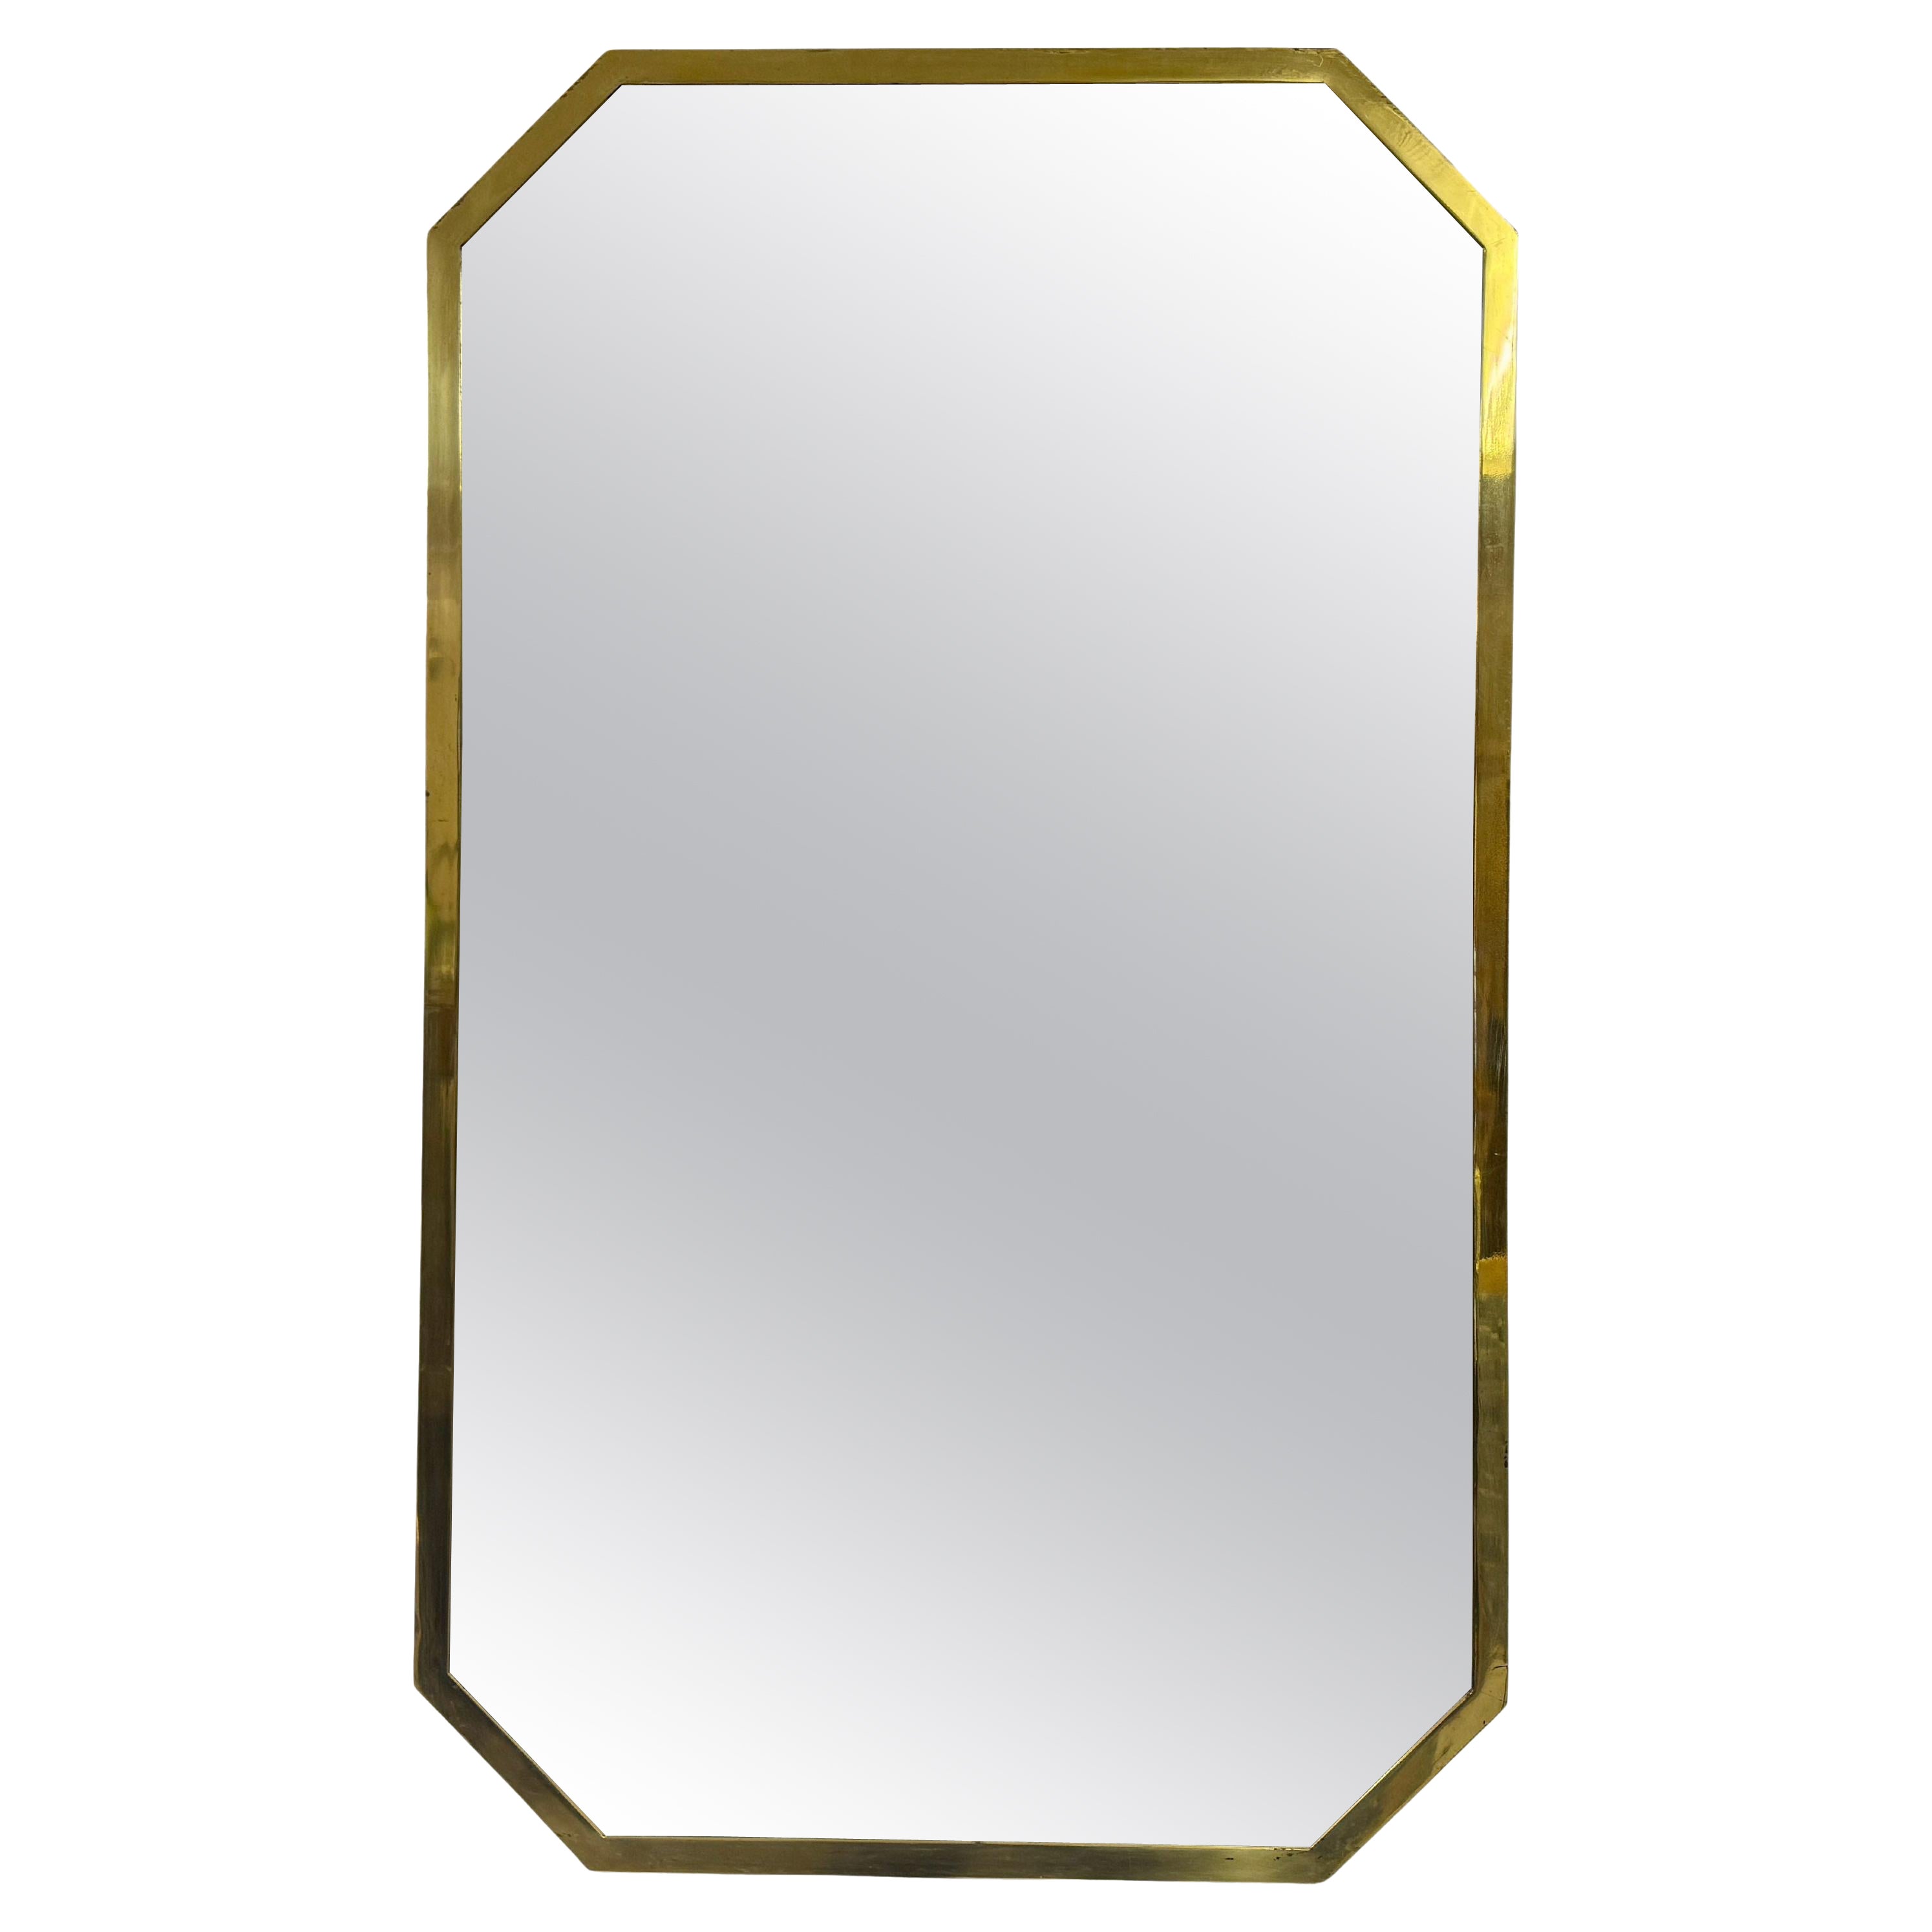 1970s Italian Brass Octagonal Mirror